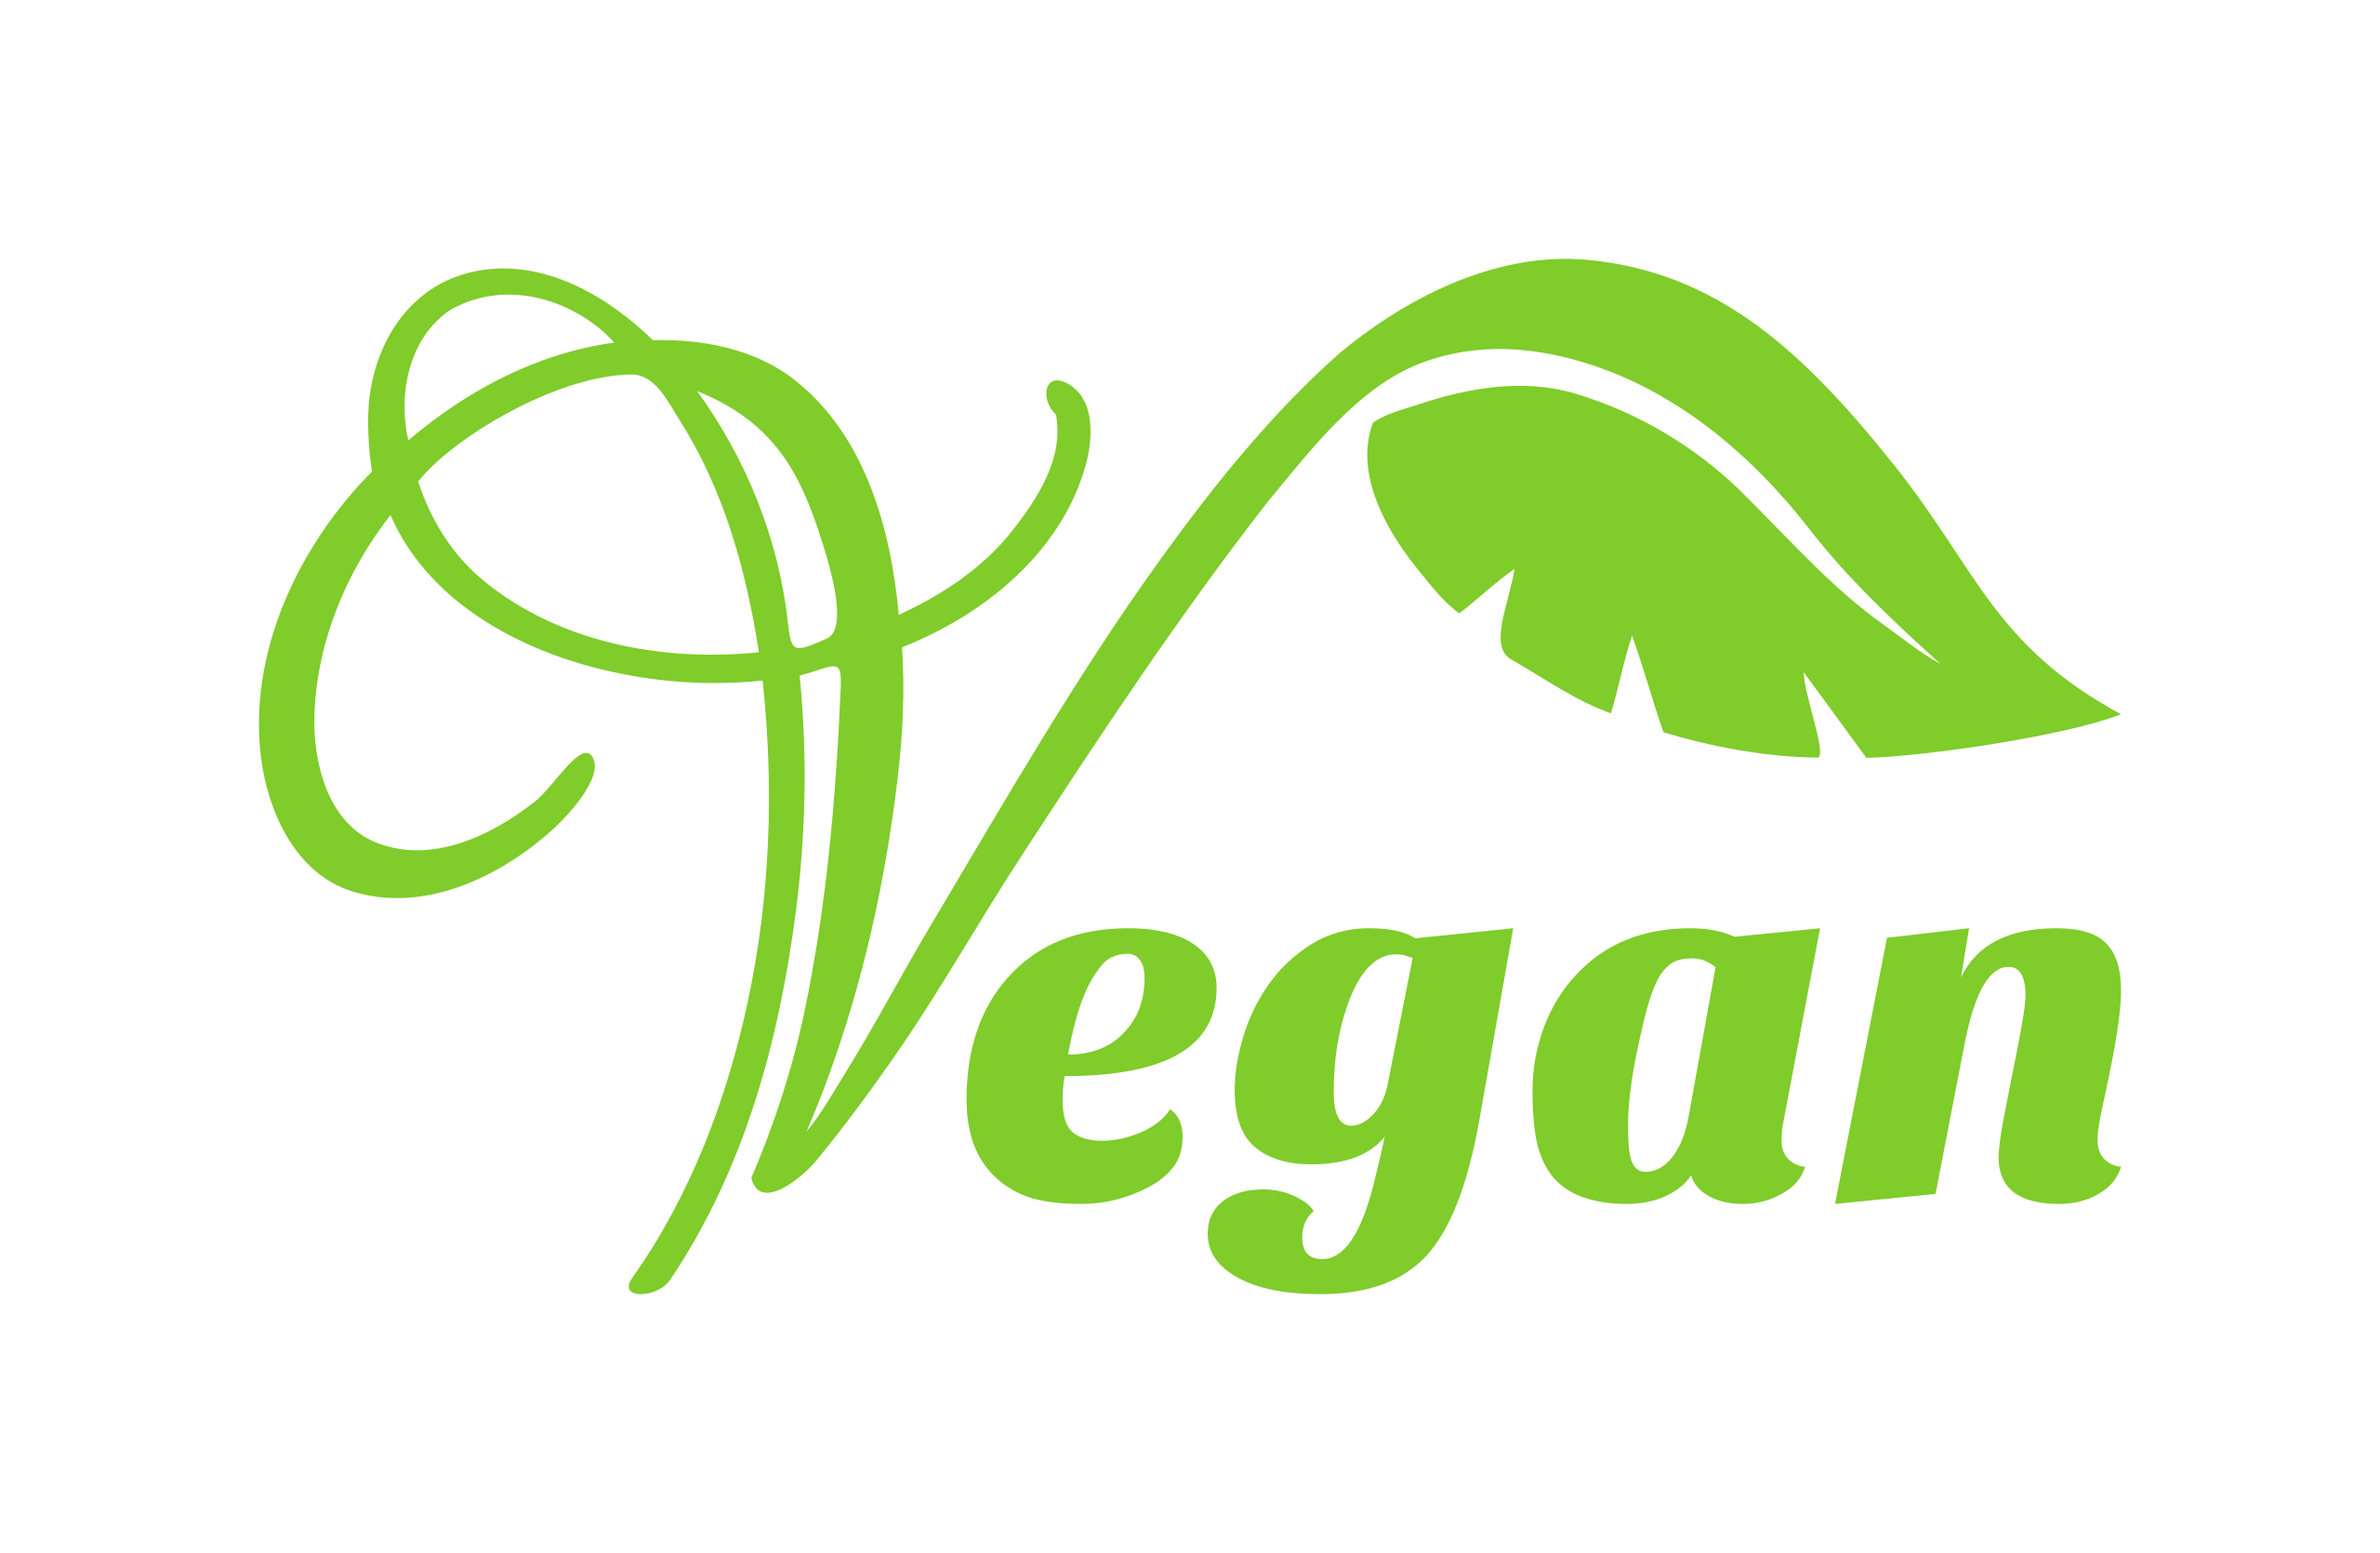 2560px-Vegan_logo-svg.png